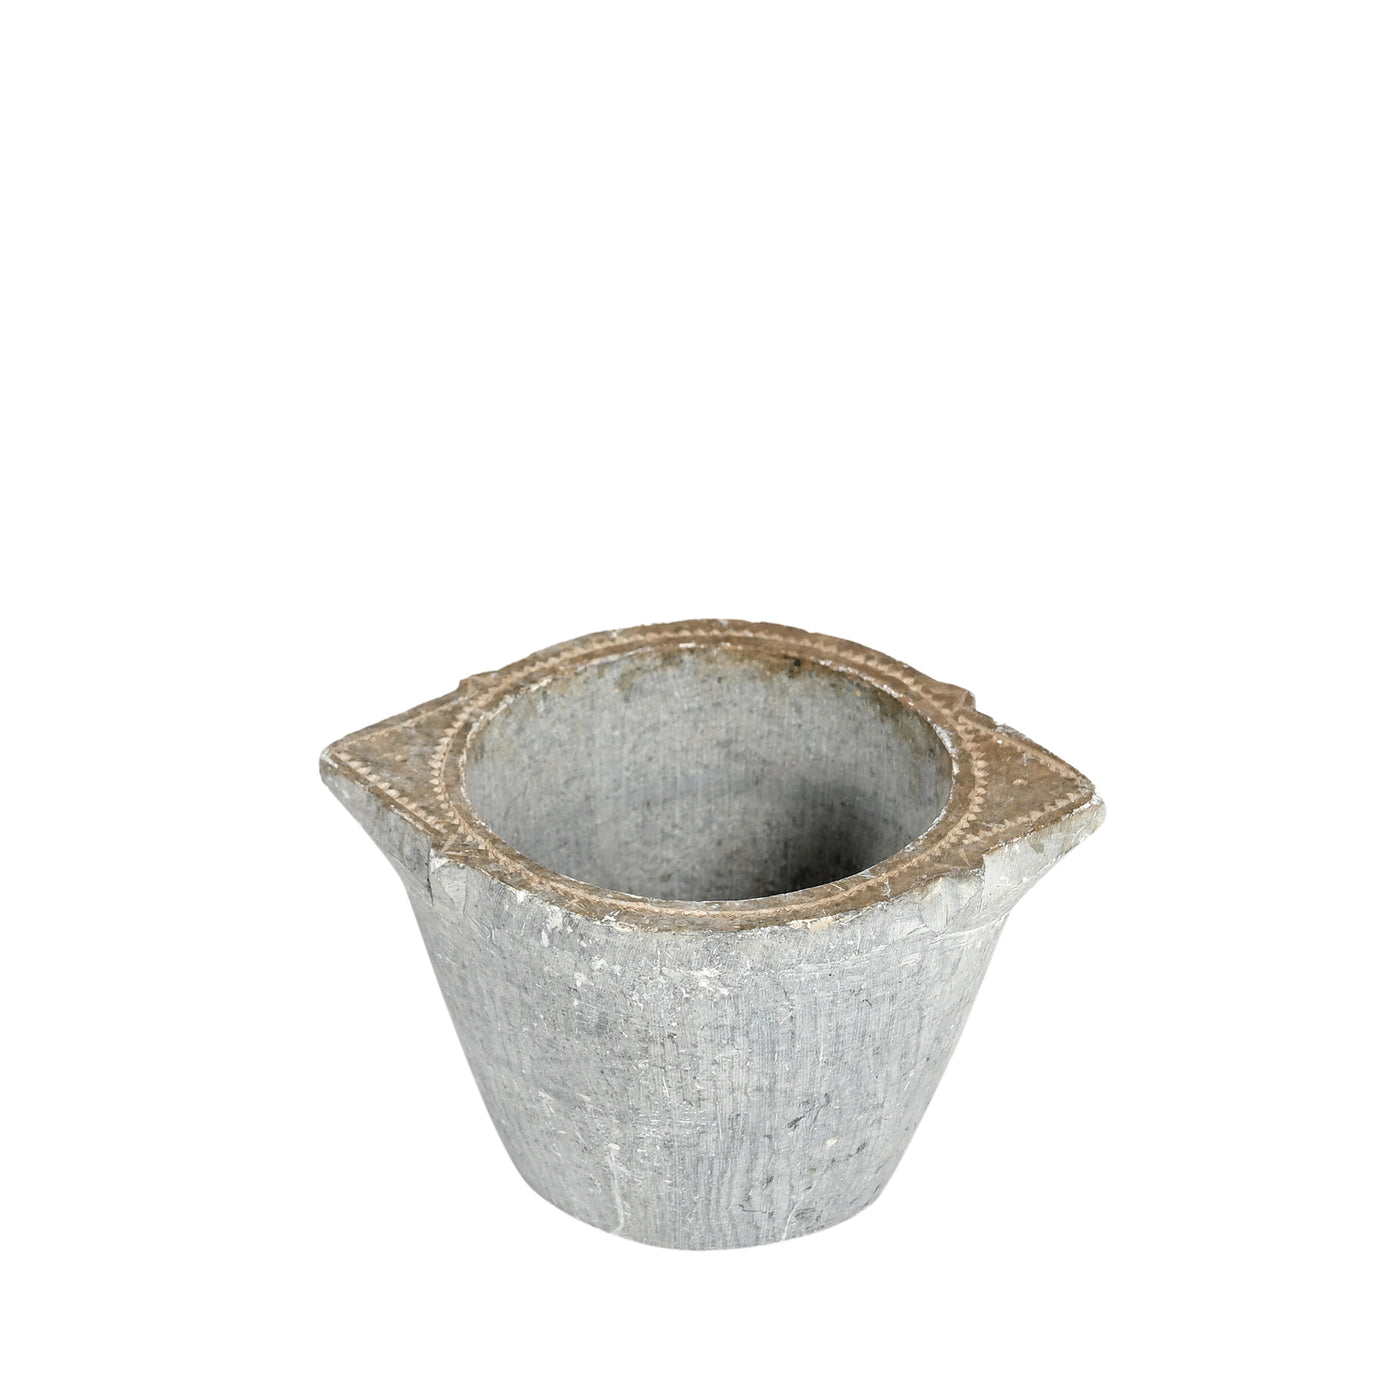 Kovaya - Stone bowl n ° 2